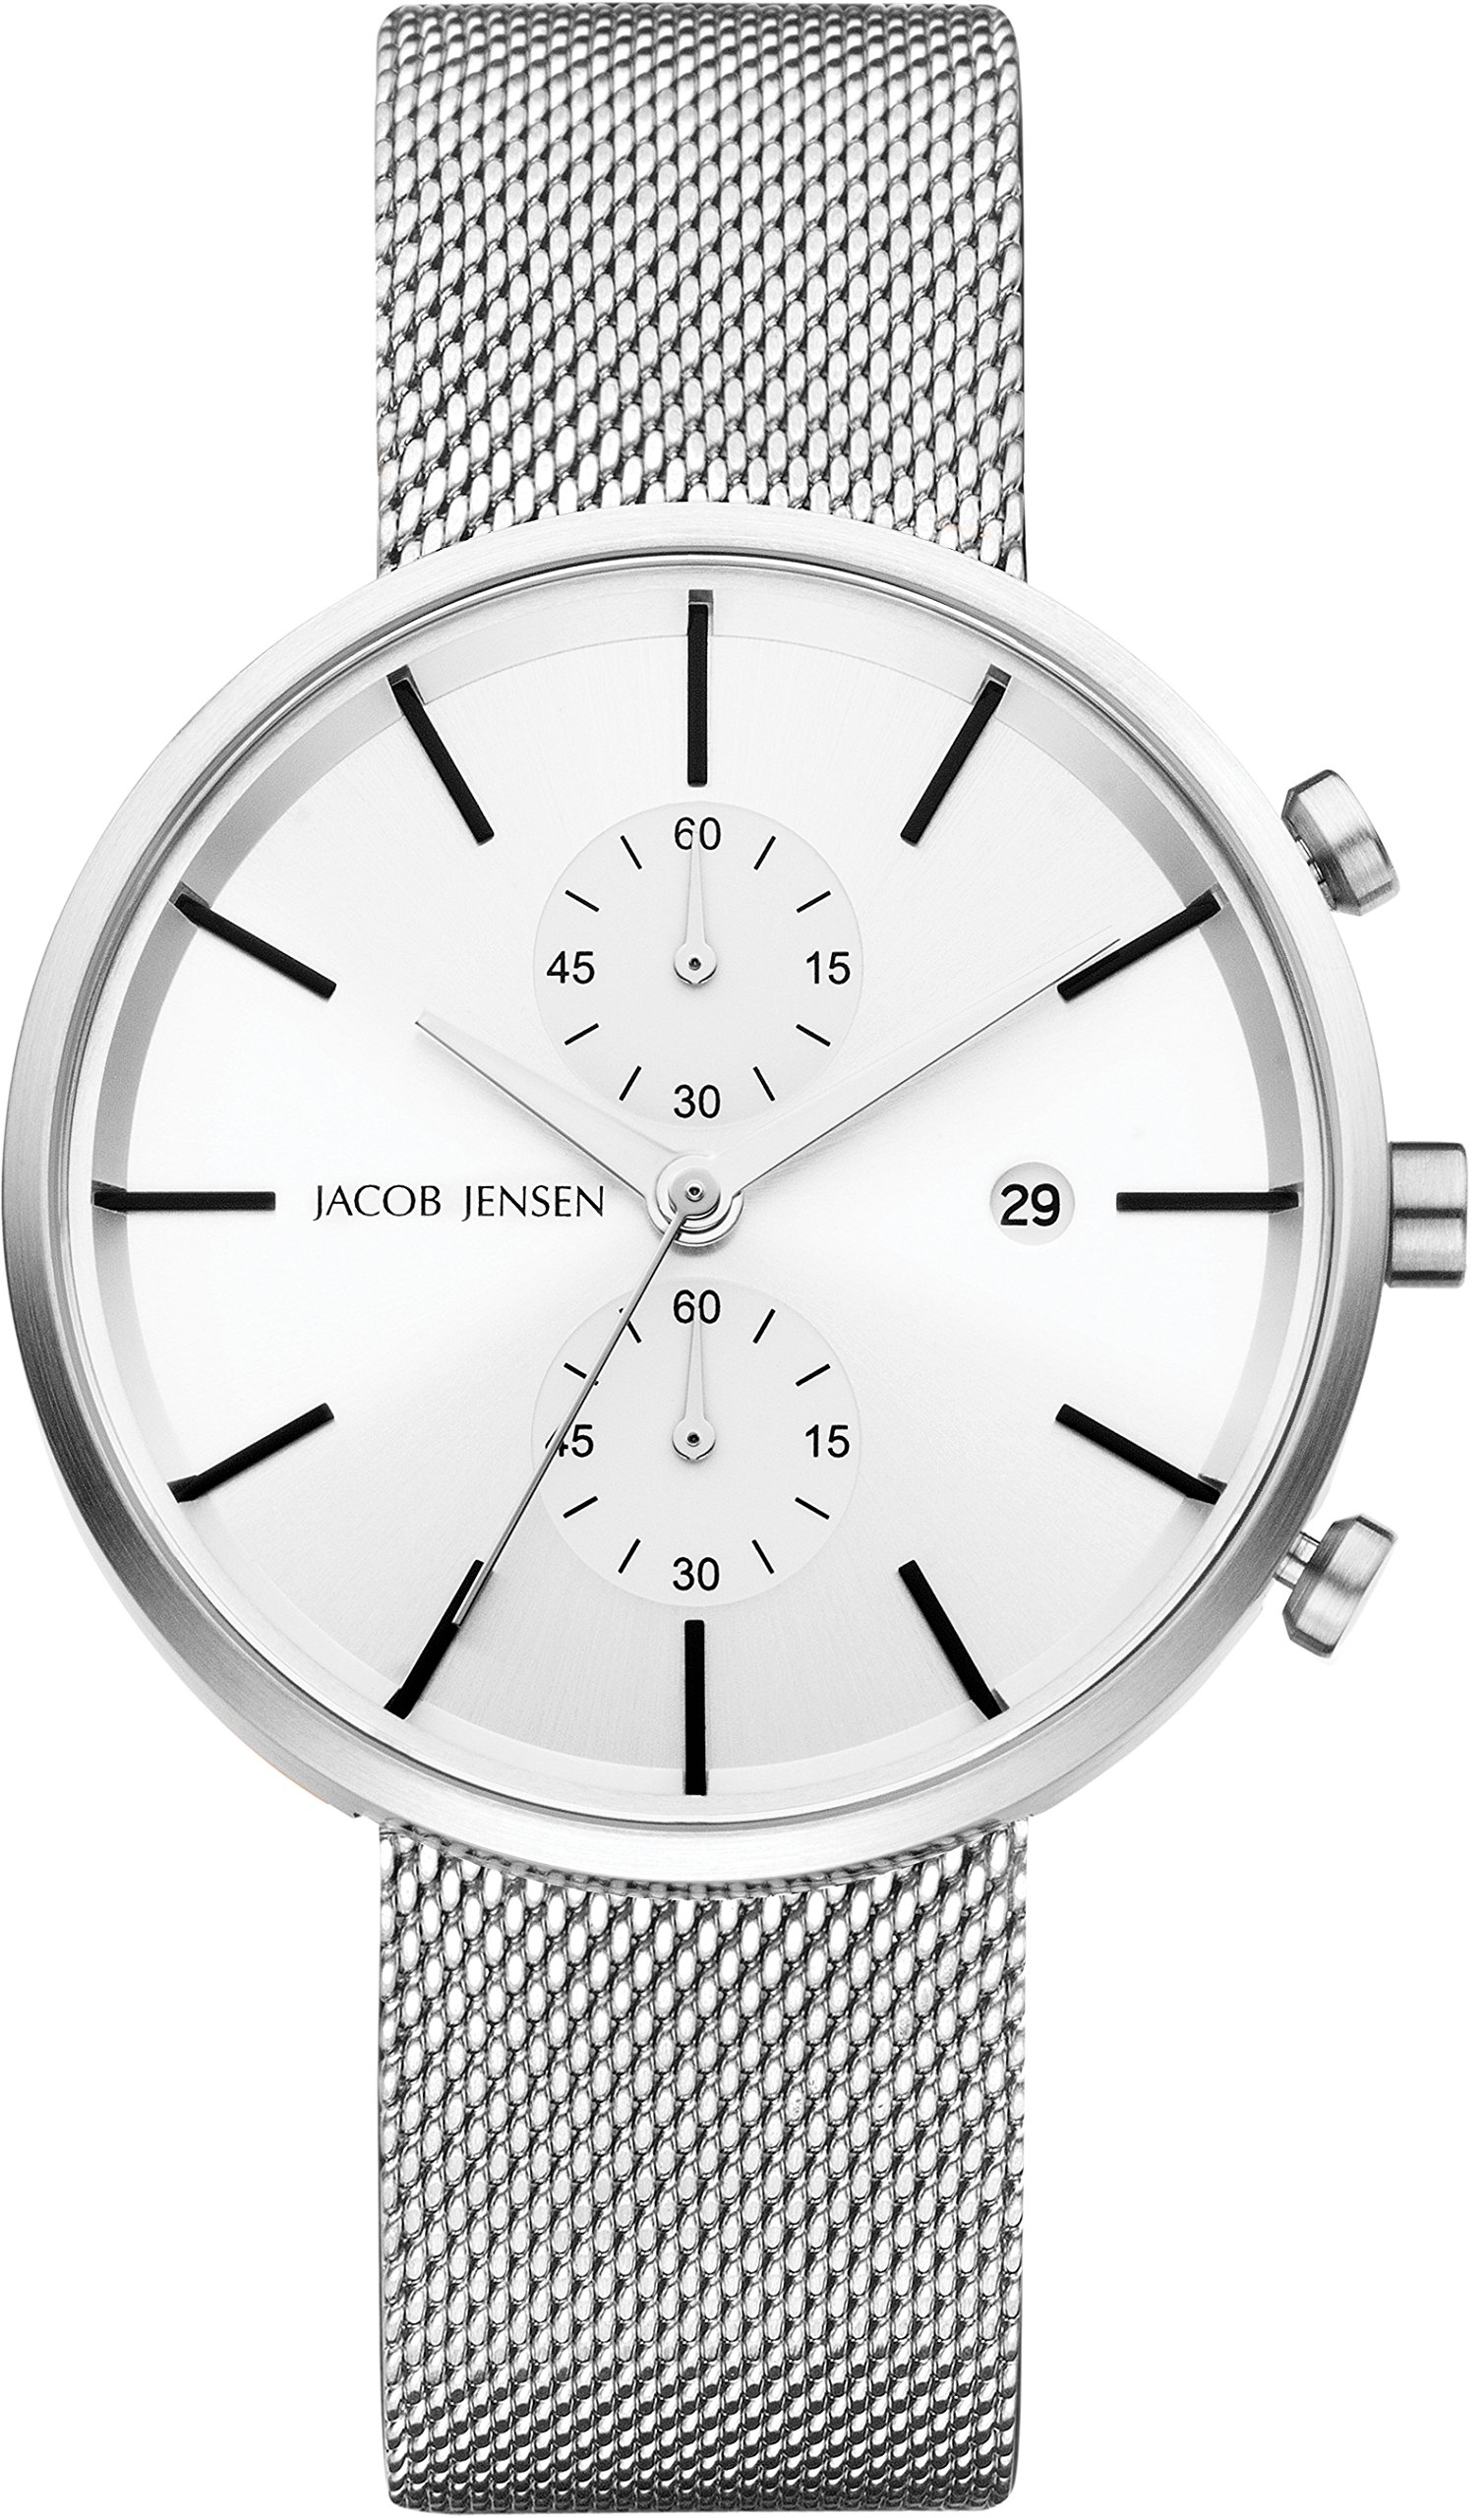 Jacob Jensen Herren Chronograph Quarz Uhr mit Edelstahl Armband 625